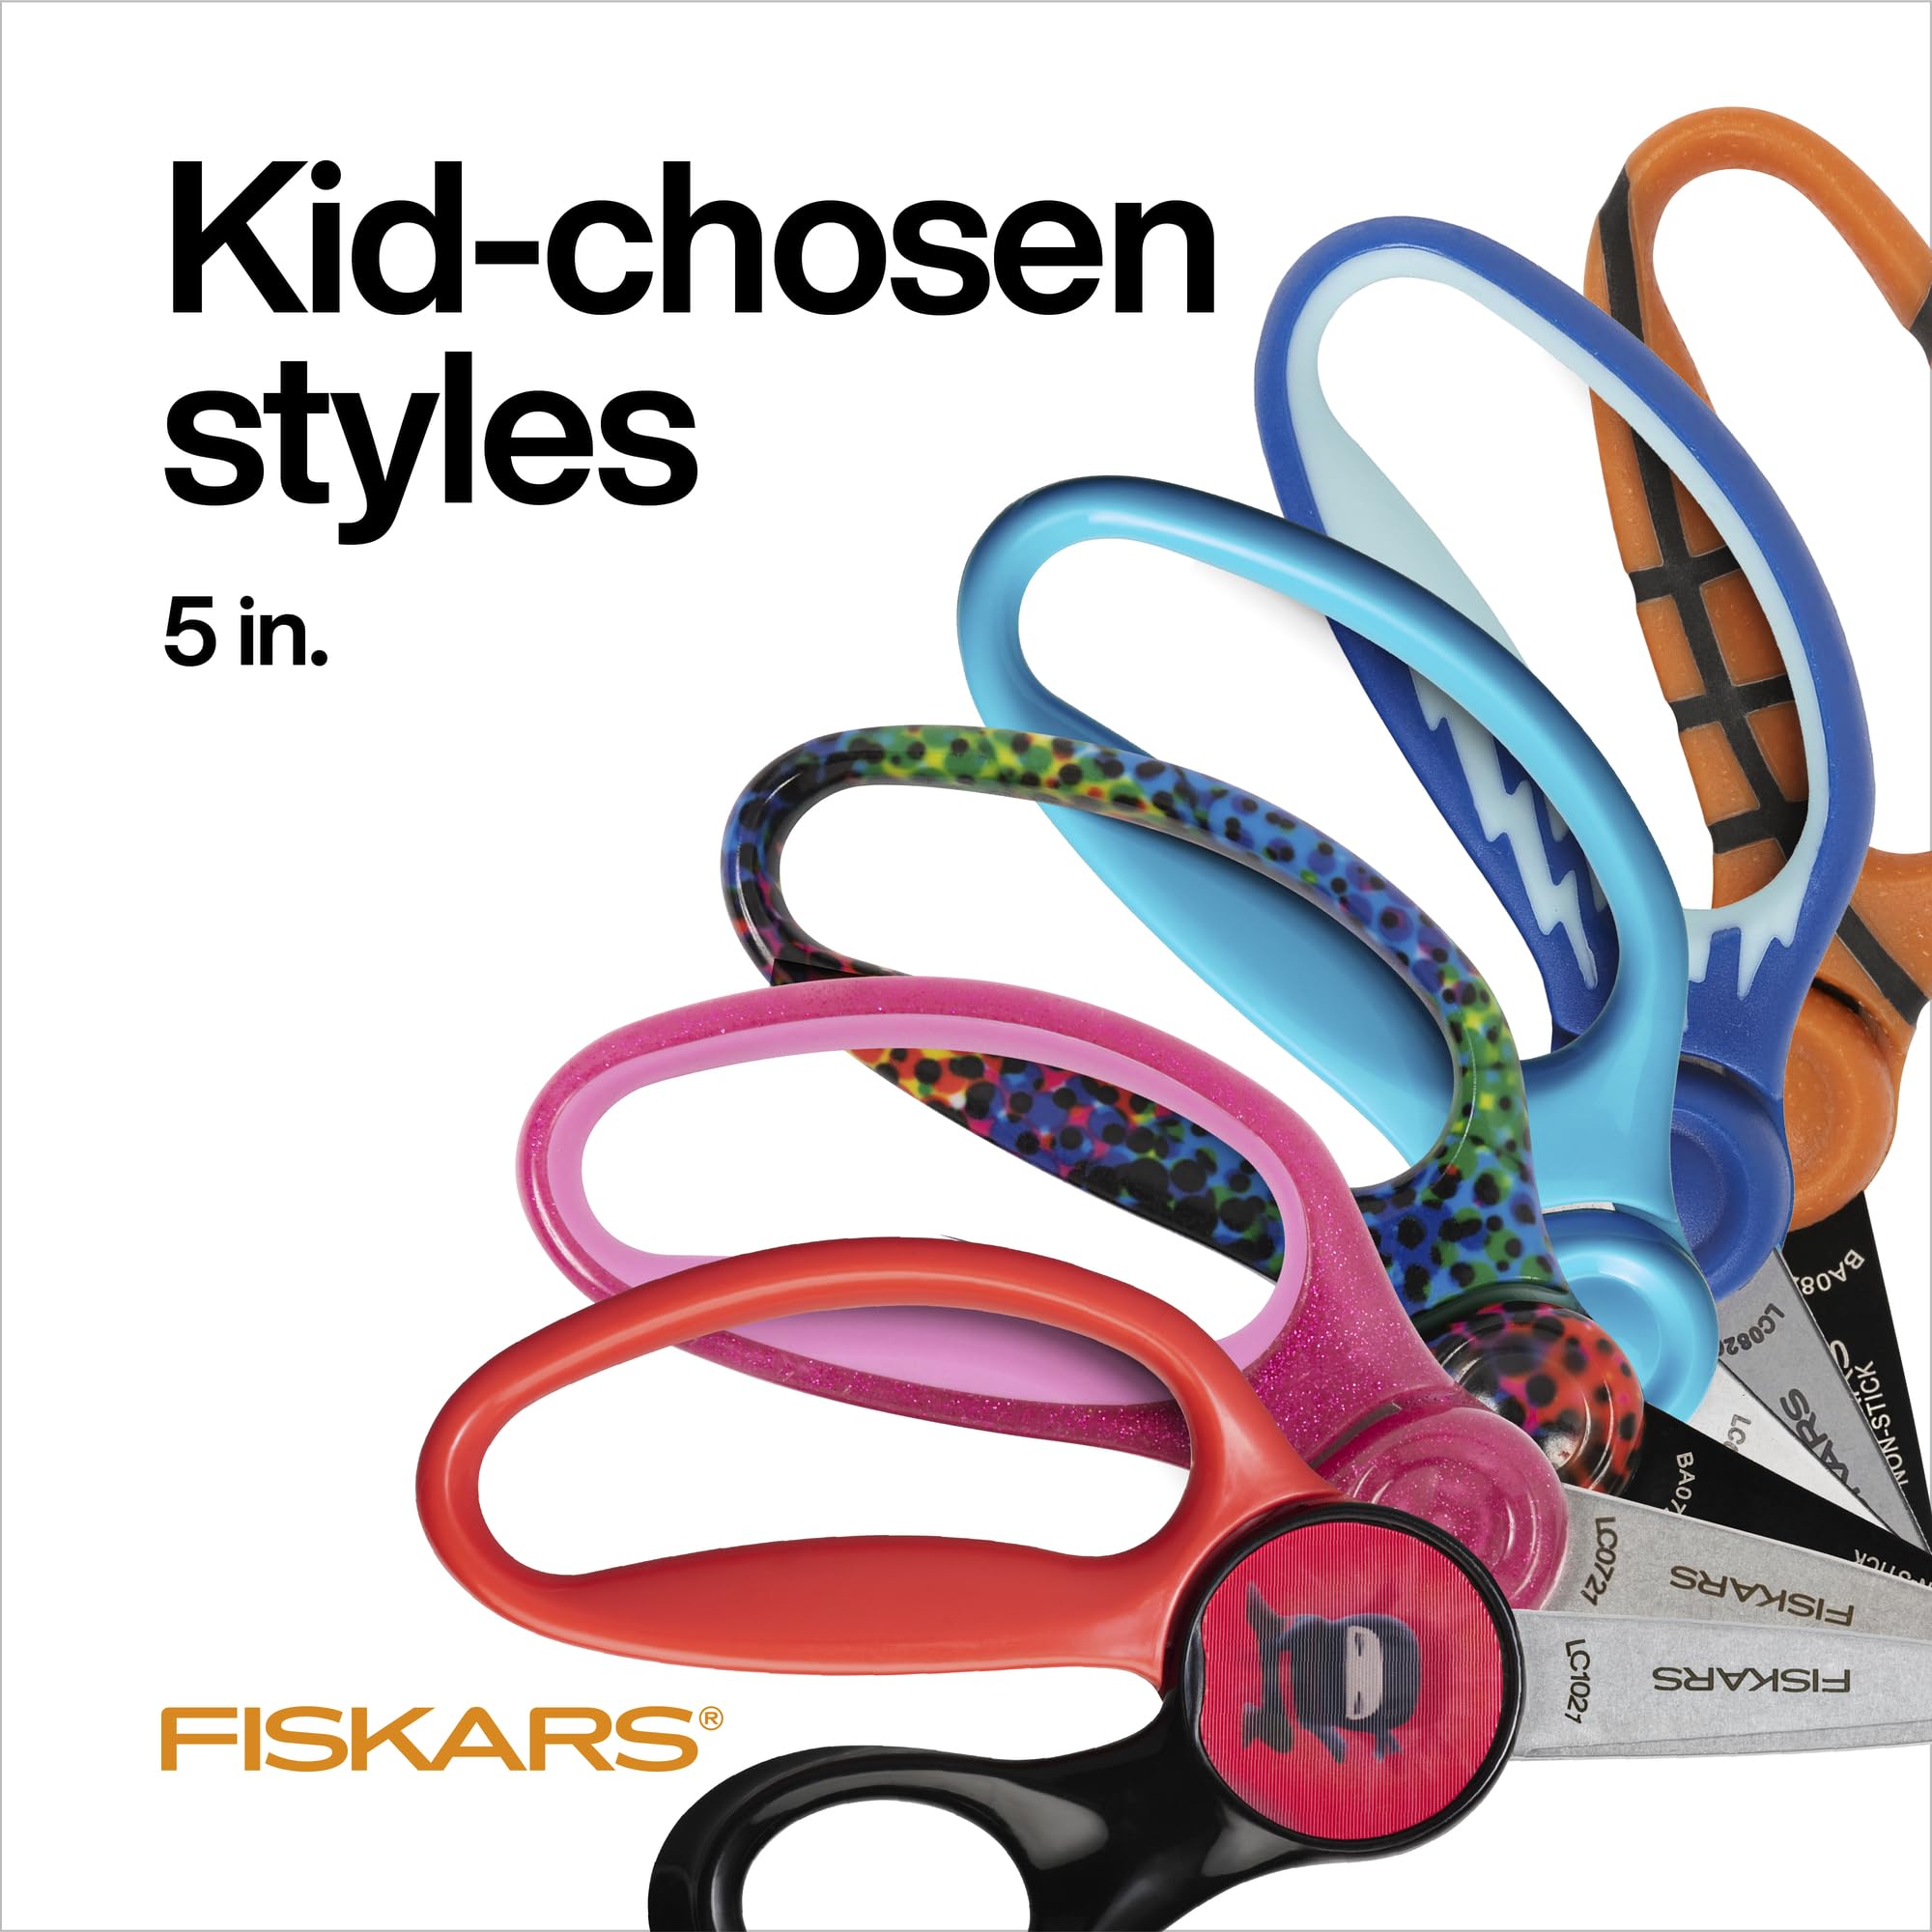 Fiskars® Blunt-tip Kids Scissors, Pink (5 in.)